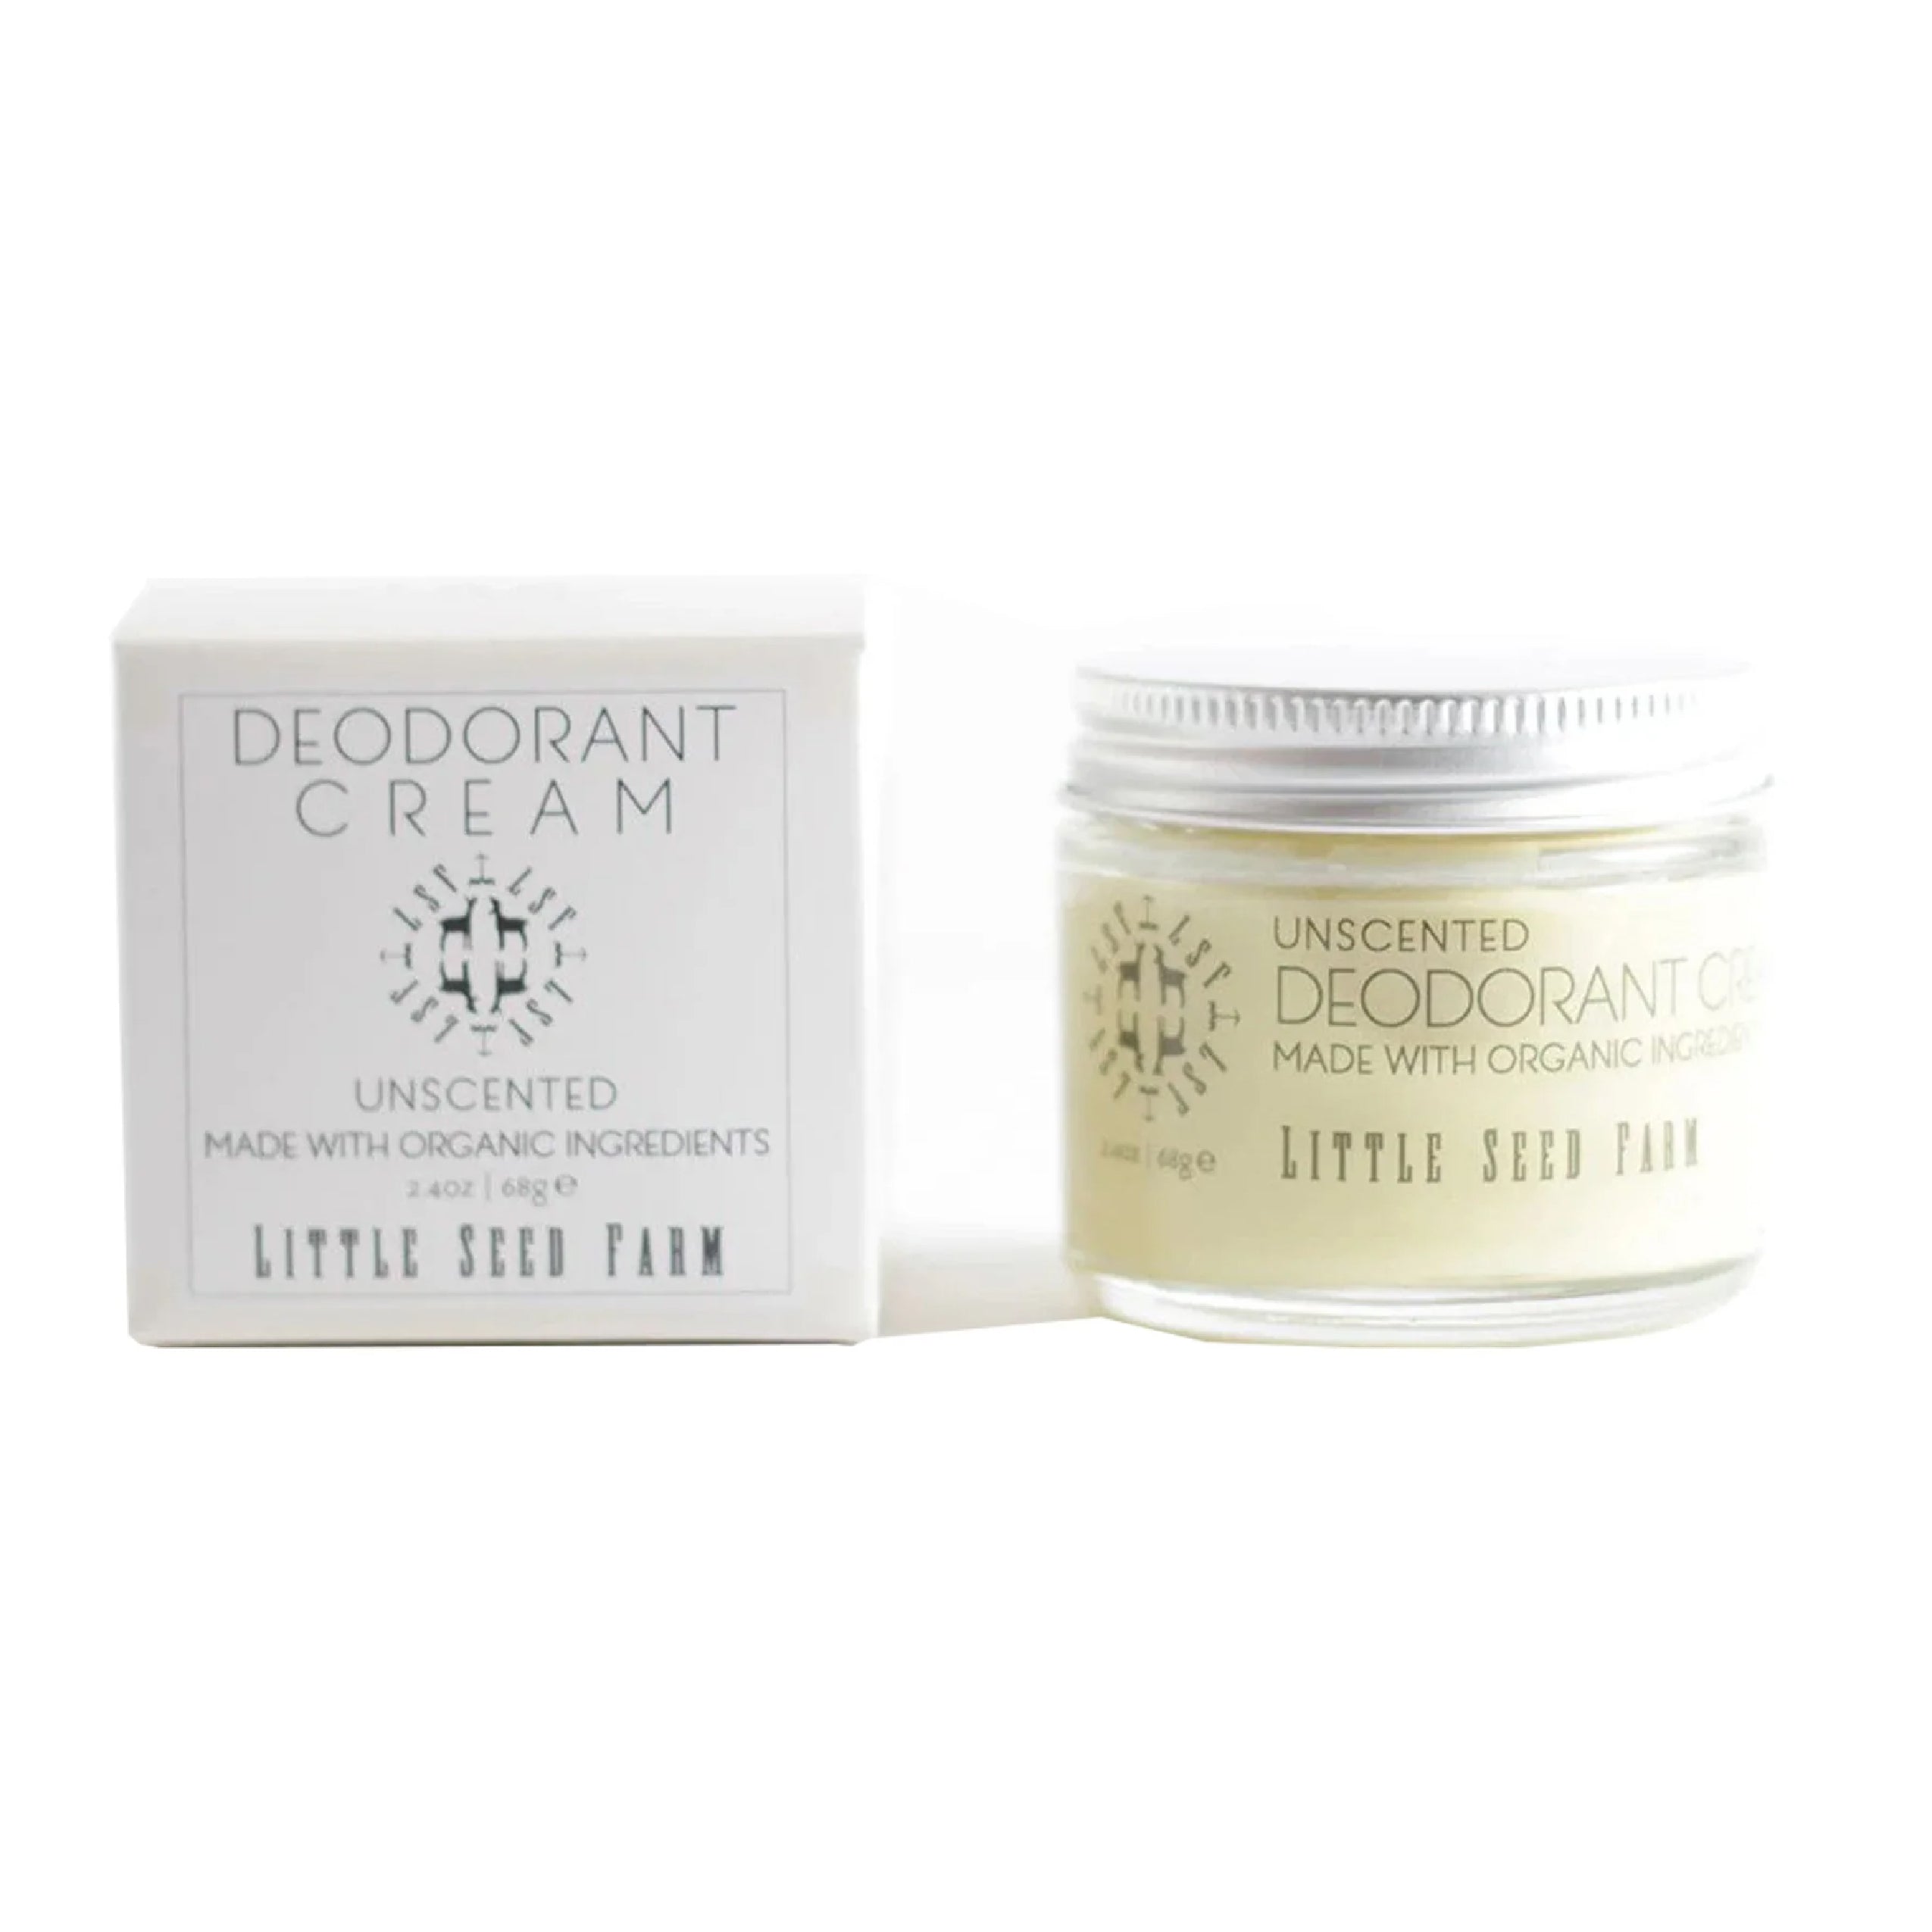 Little Seed Farm - Unscented Deodorant Cream